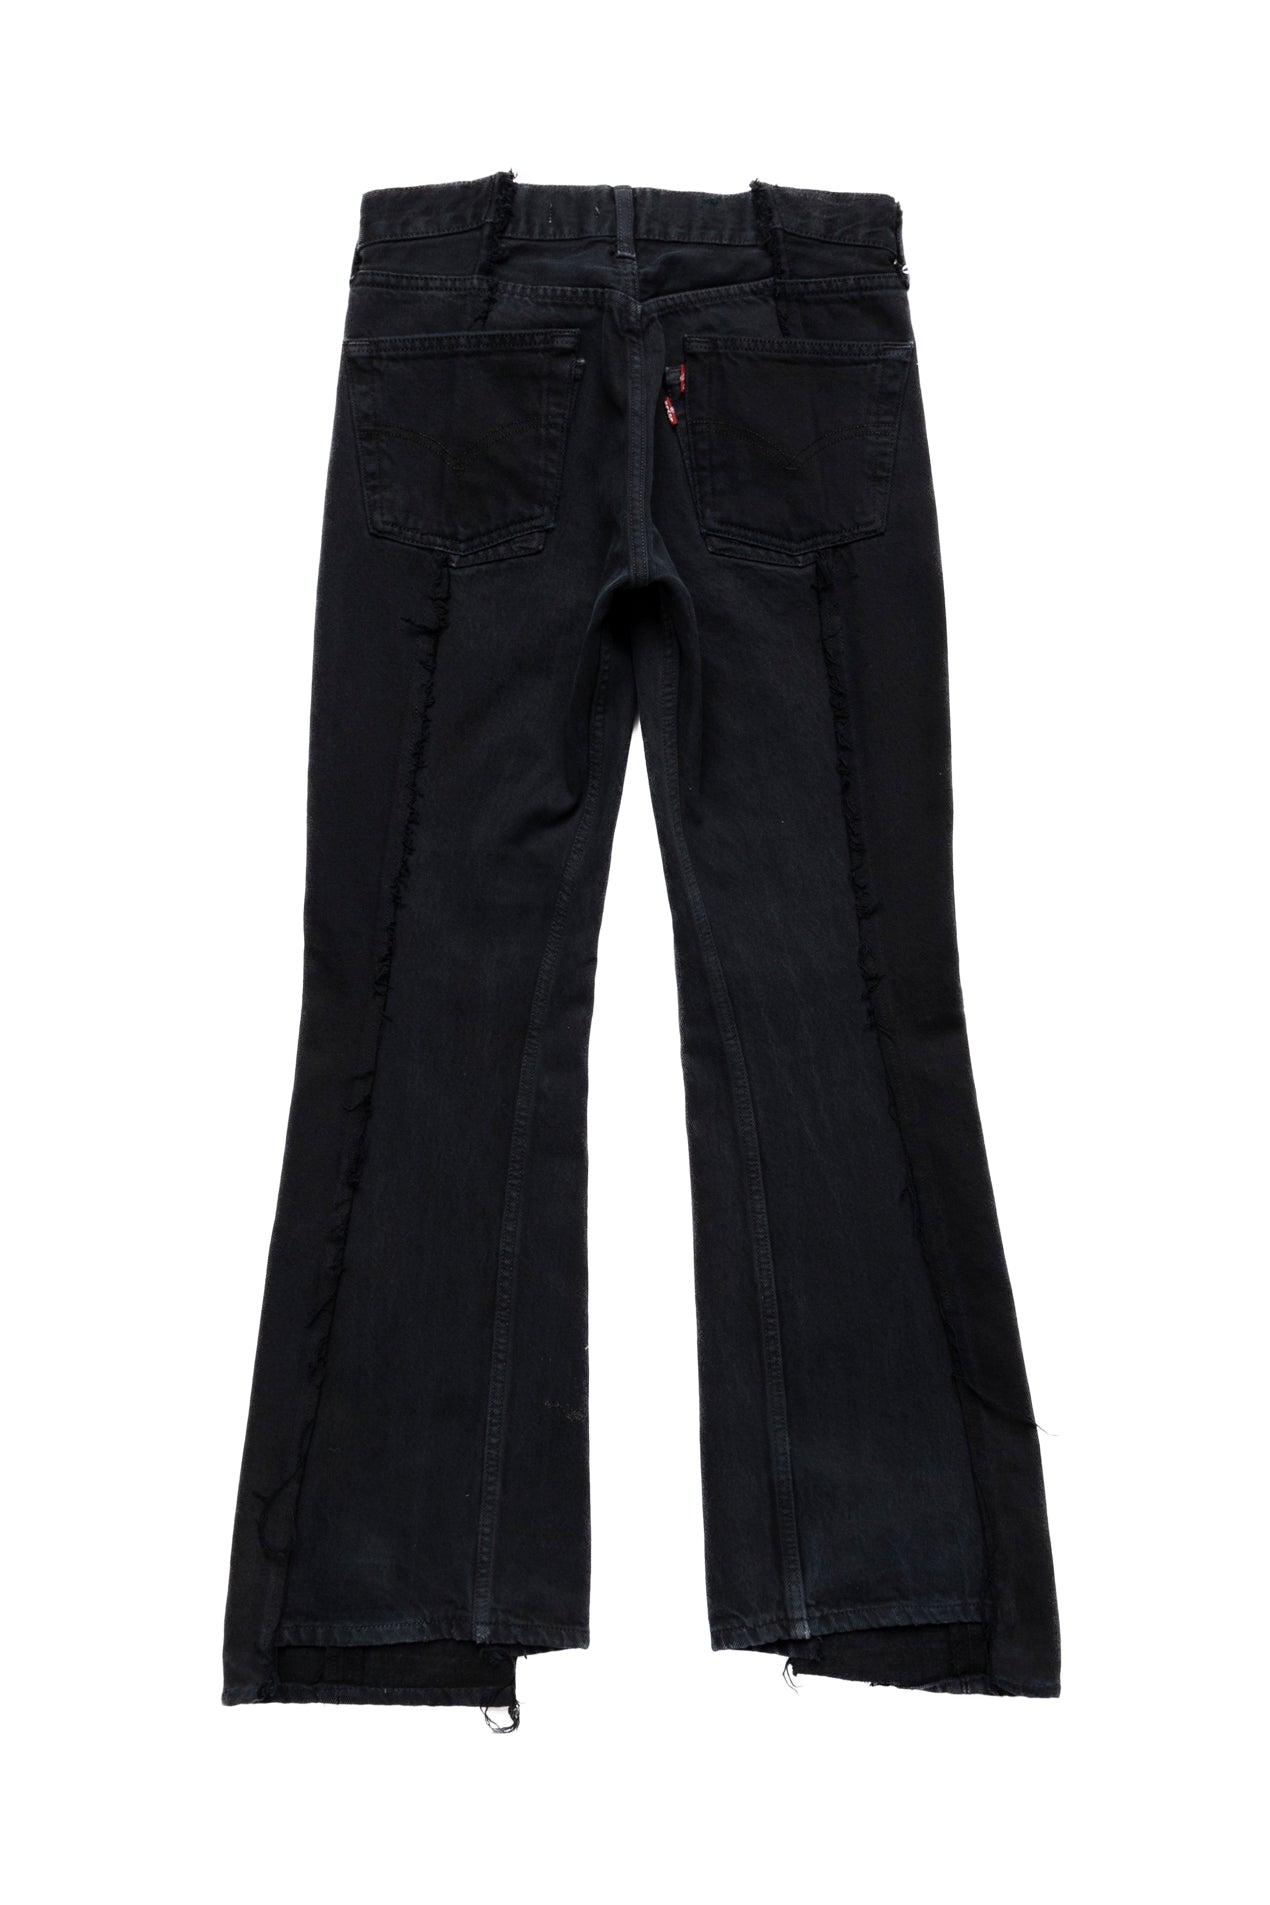 W Pocket Flare Jeans Black - S (1)